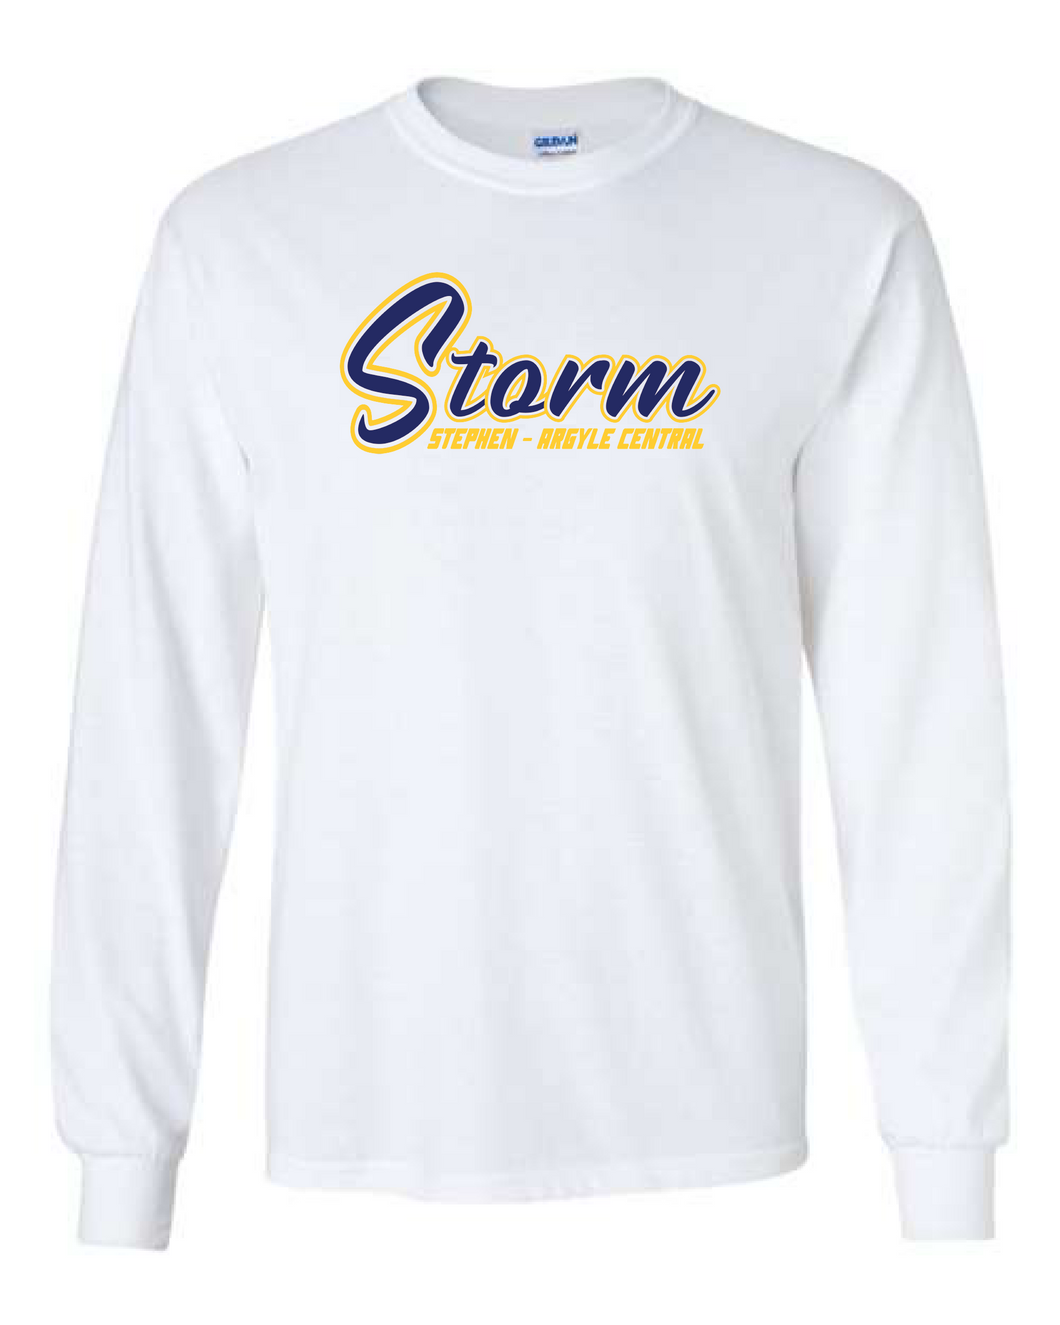 Storm Script Gildan Long Sleeve T-shirt